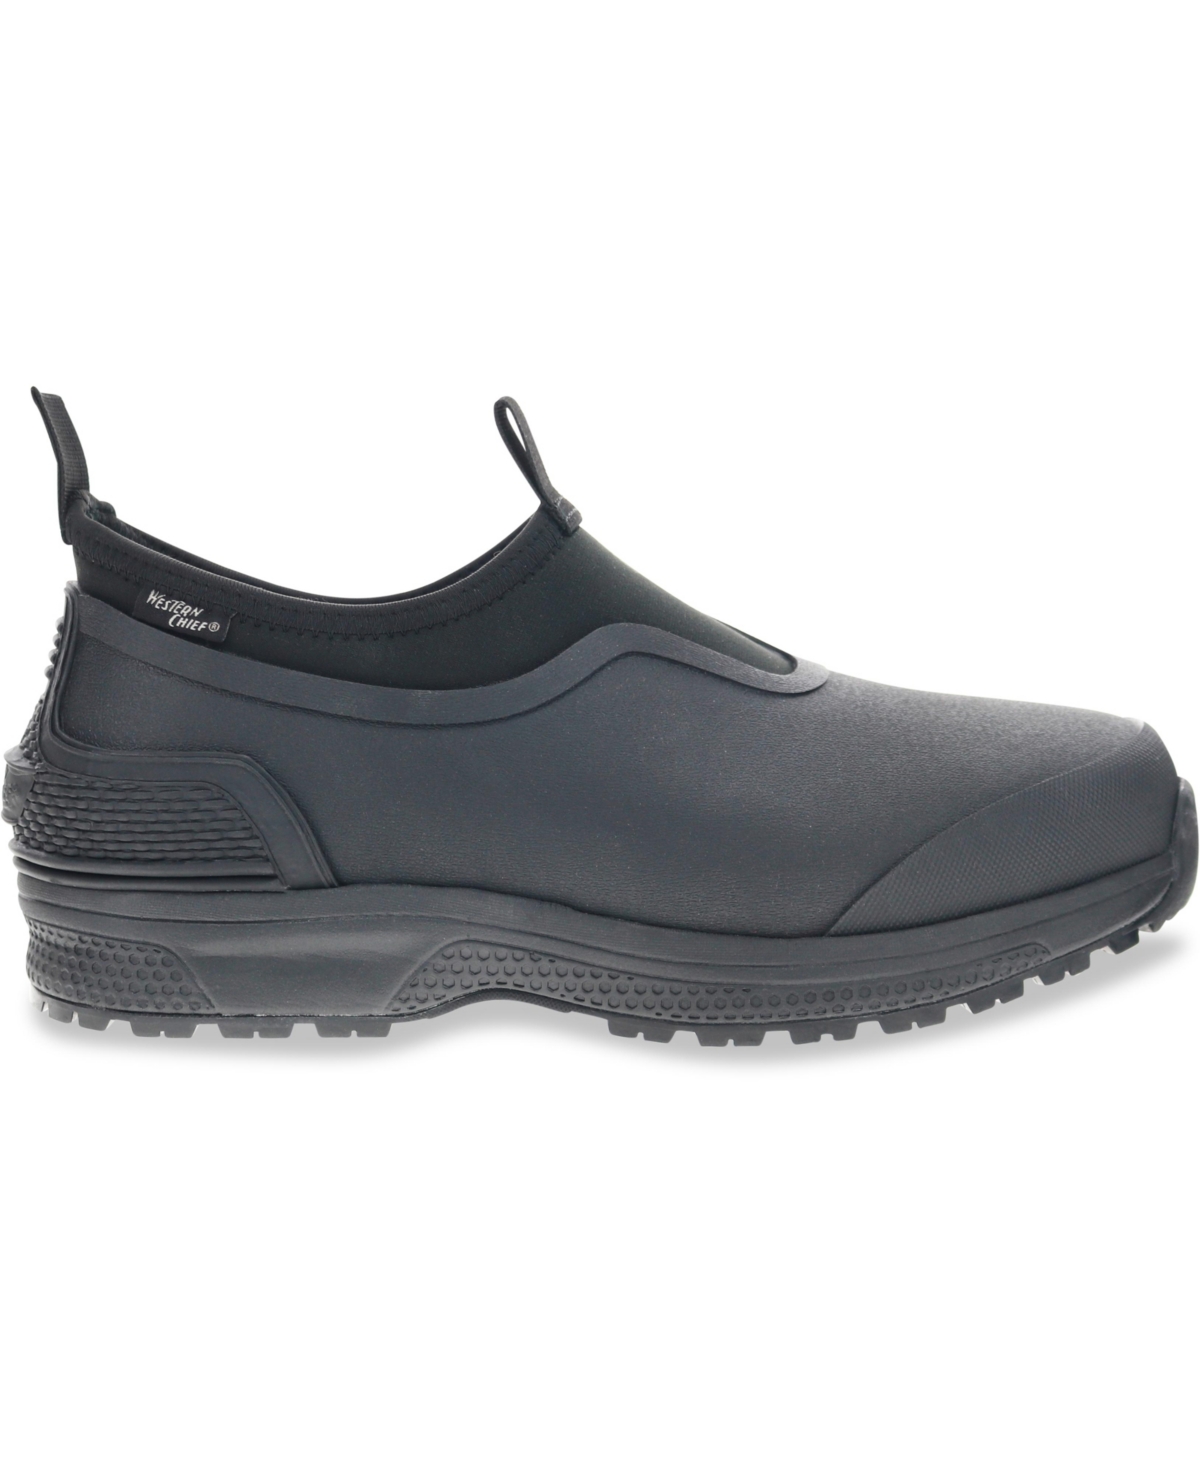 Men's Ravensdale Ankle Rain Boot - Black